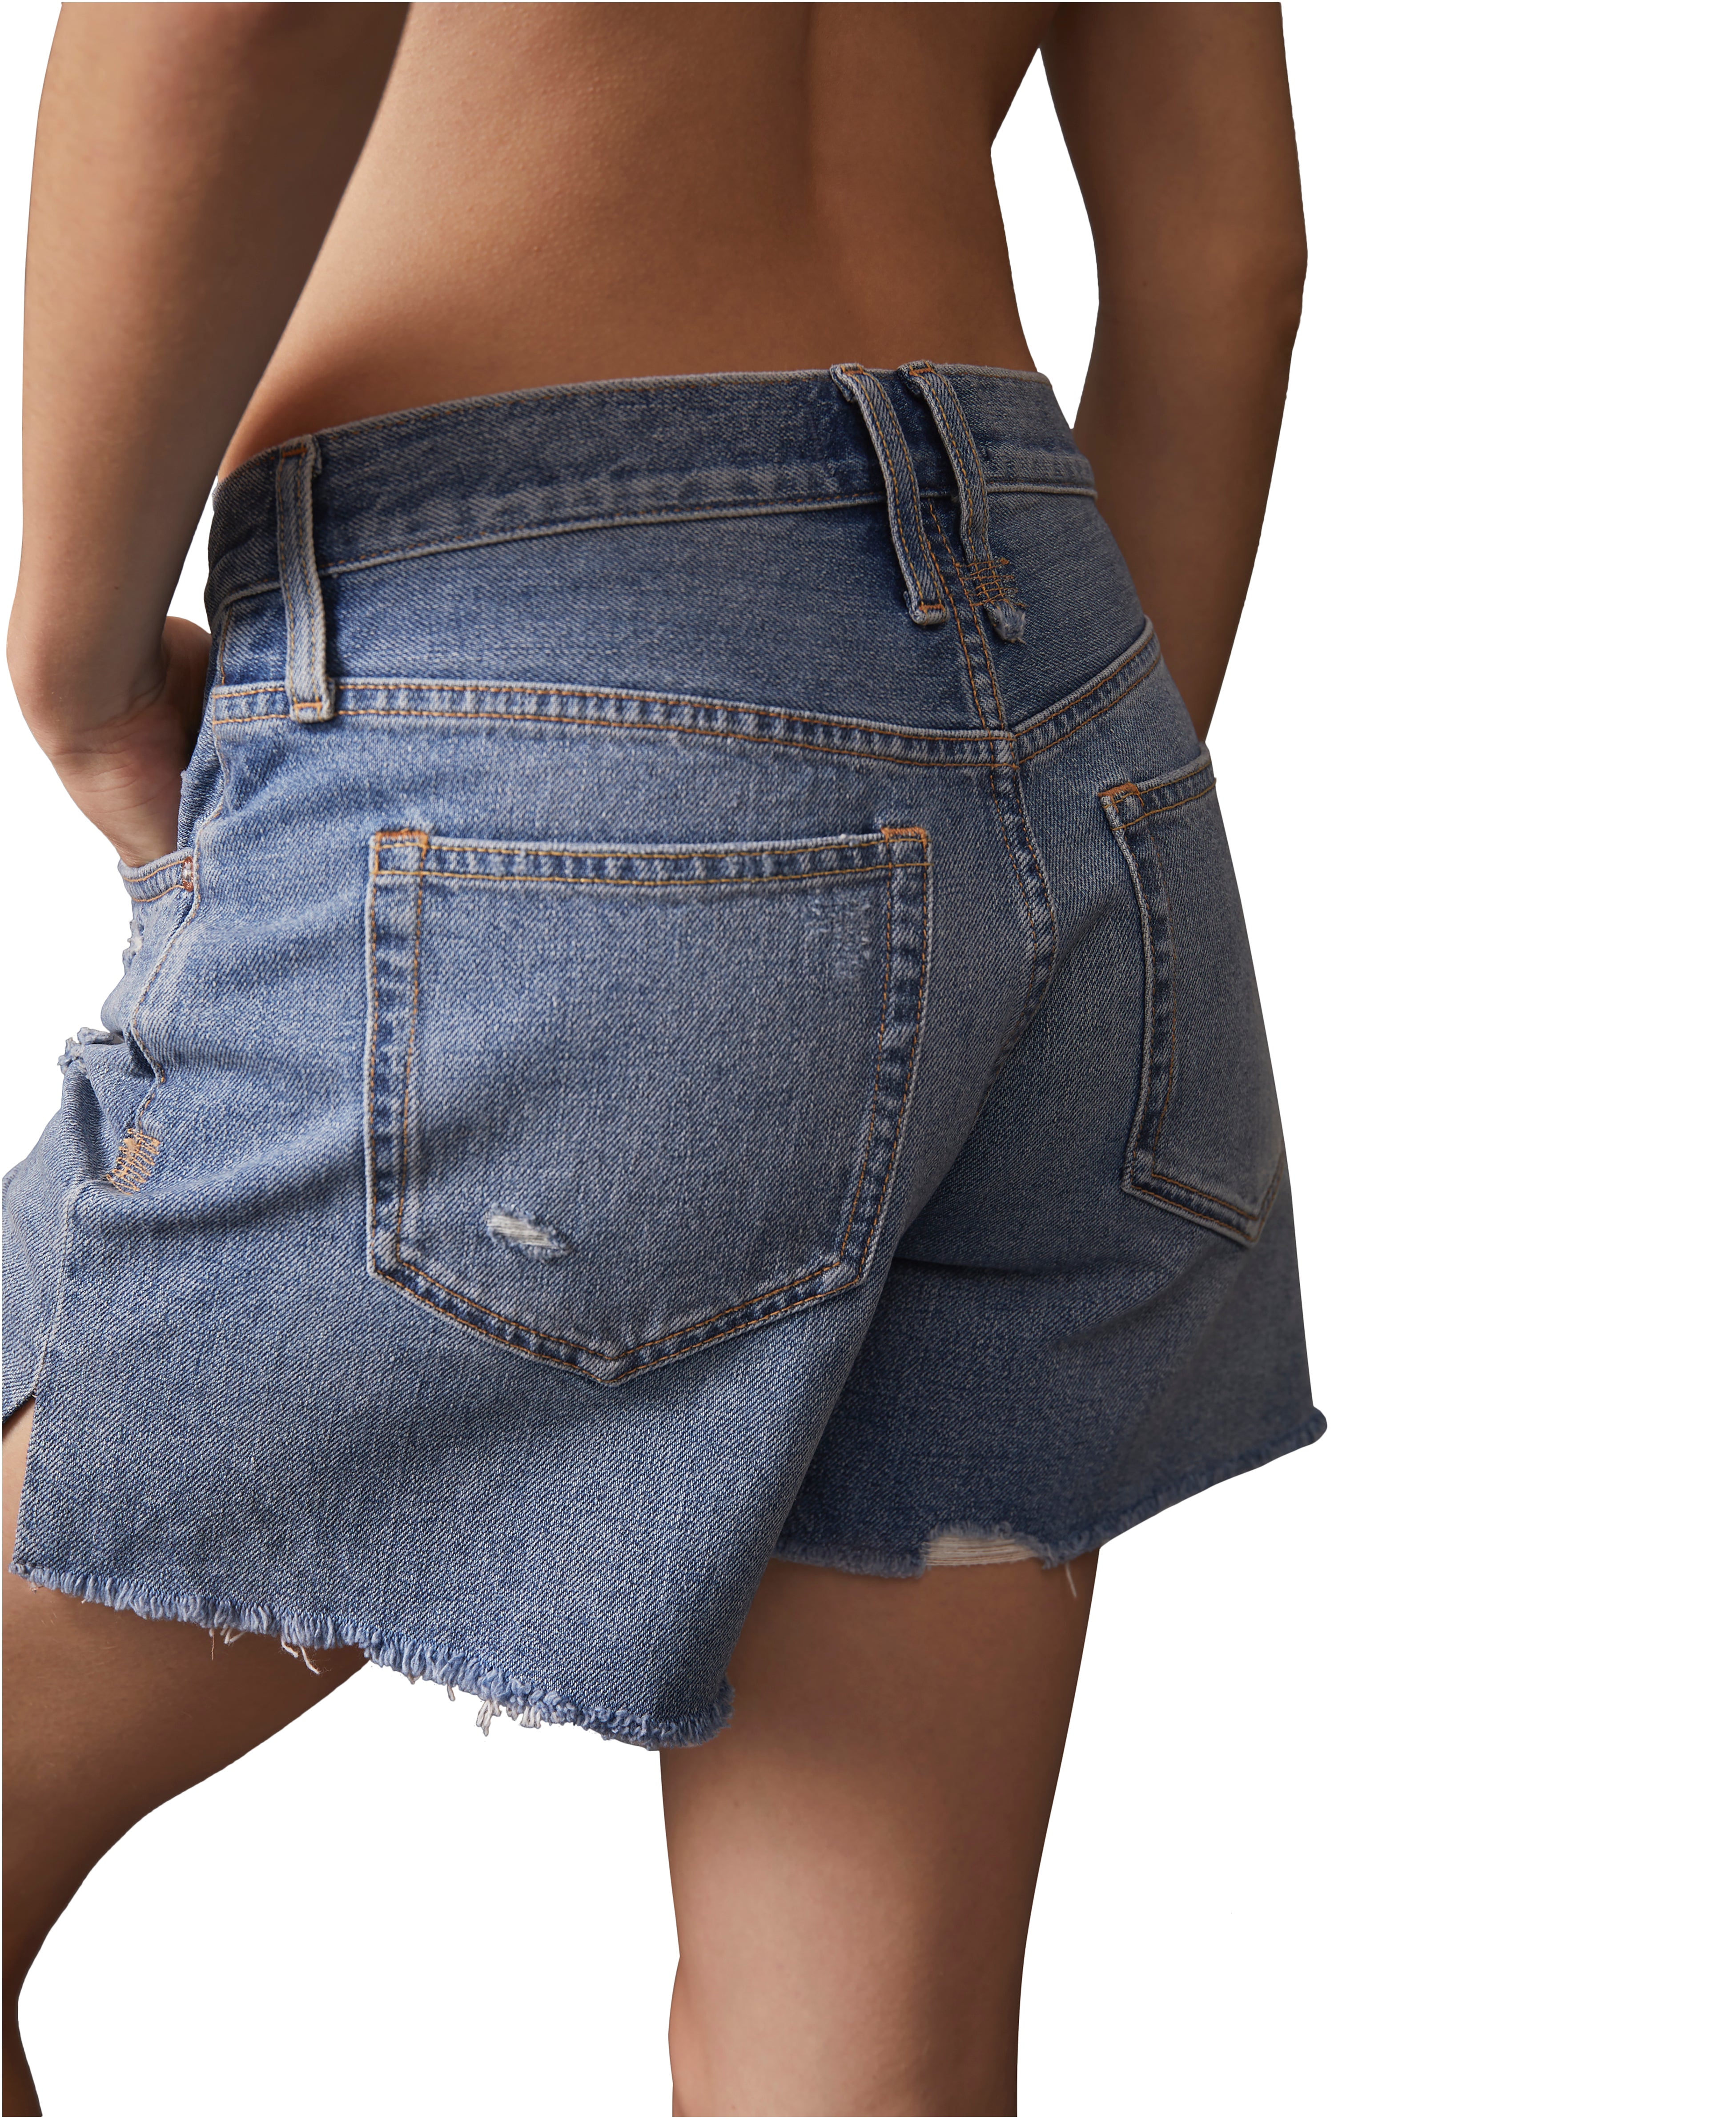 Makai Cut Off Denim Shorts